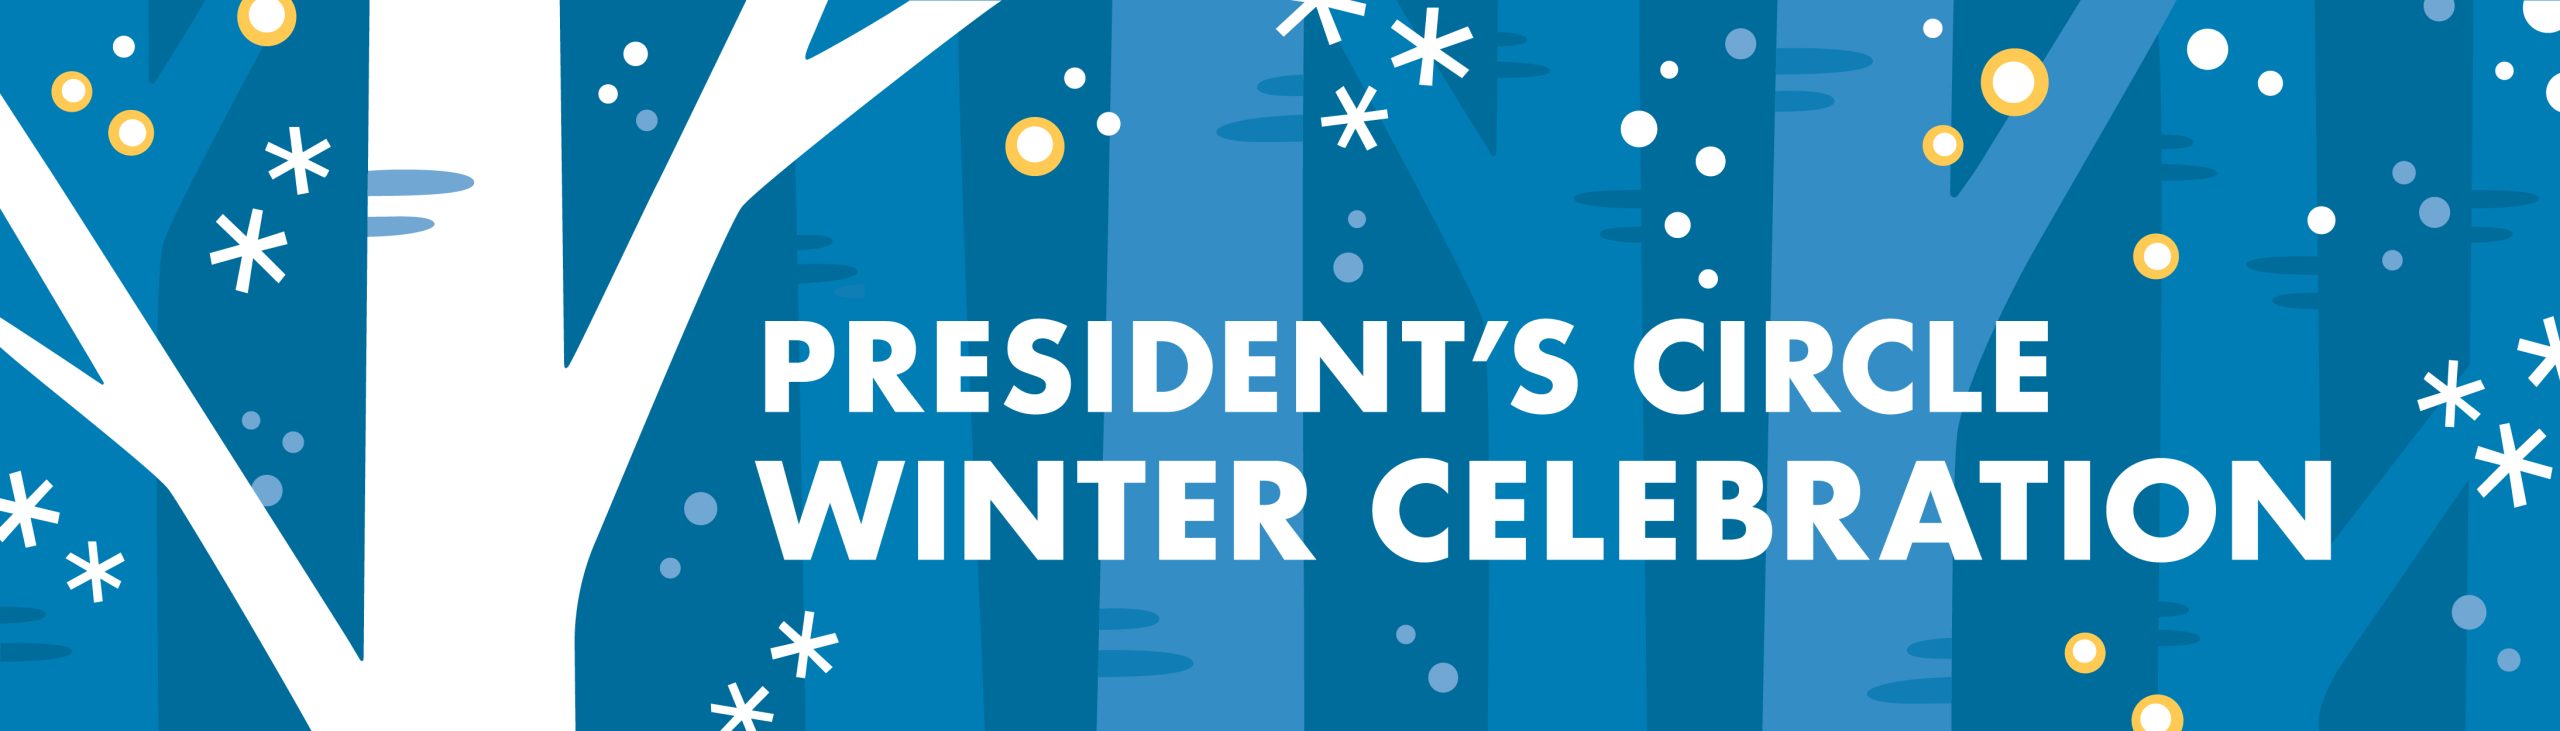 President's Circle Winter Celebration graphic 